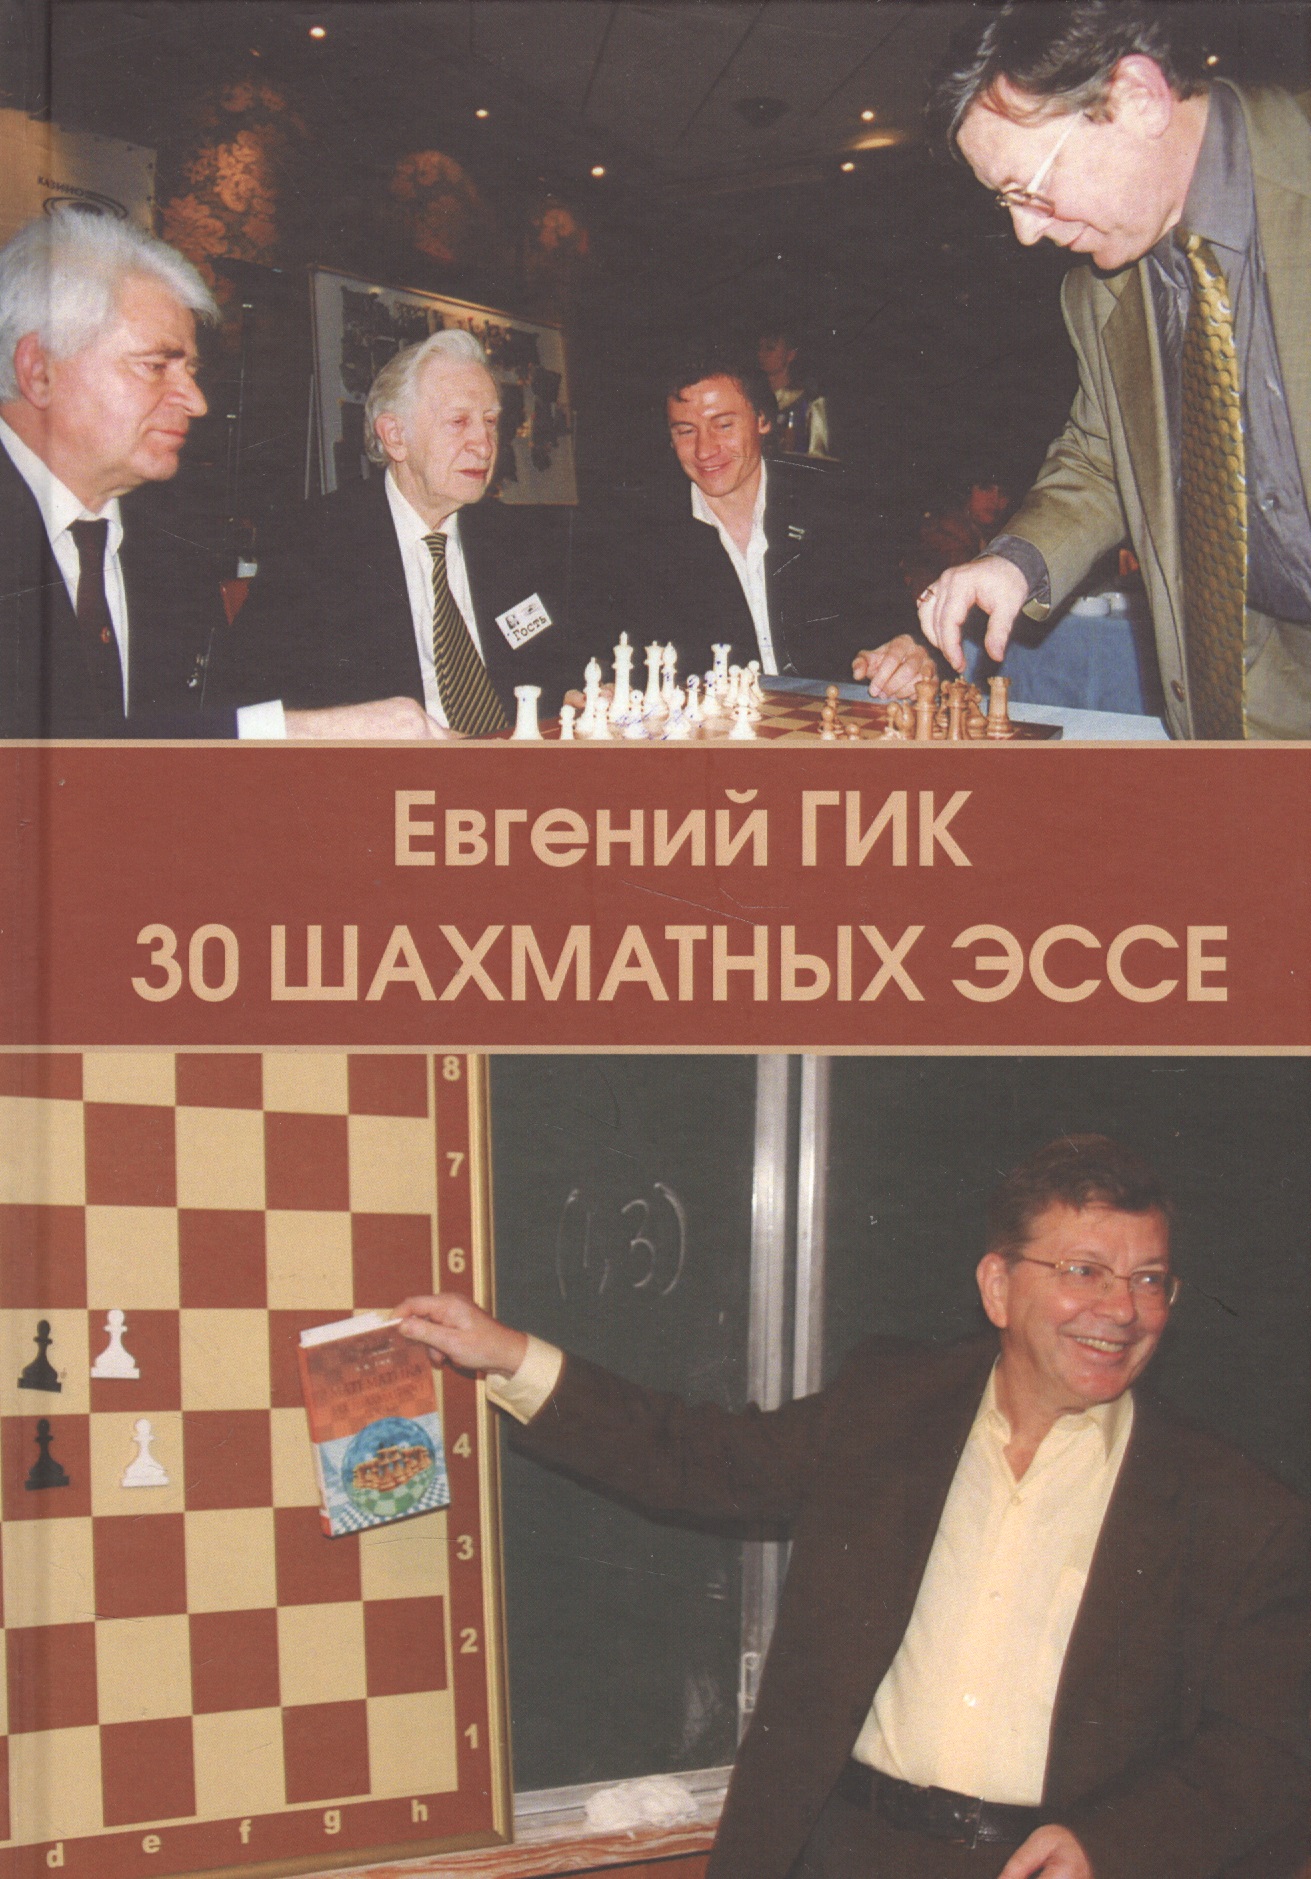 Гик Евгений Яковлевич 30 шахматных эссе гик евгений яковлевич шахматные байки